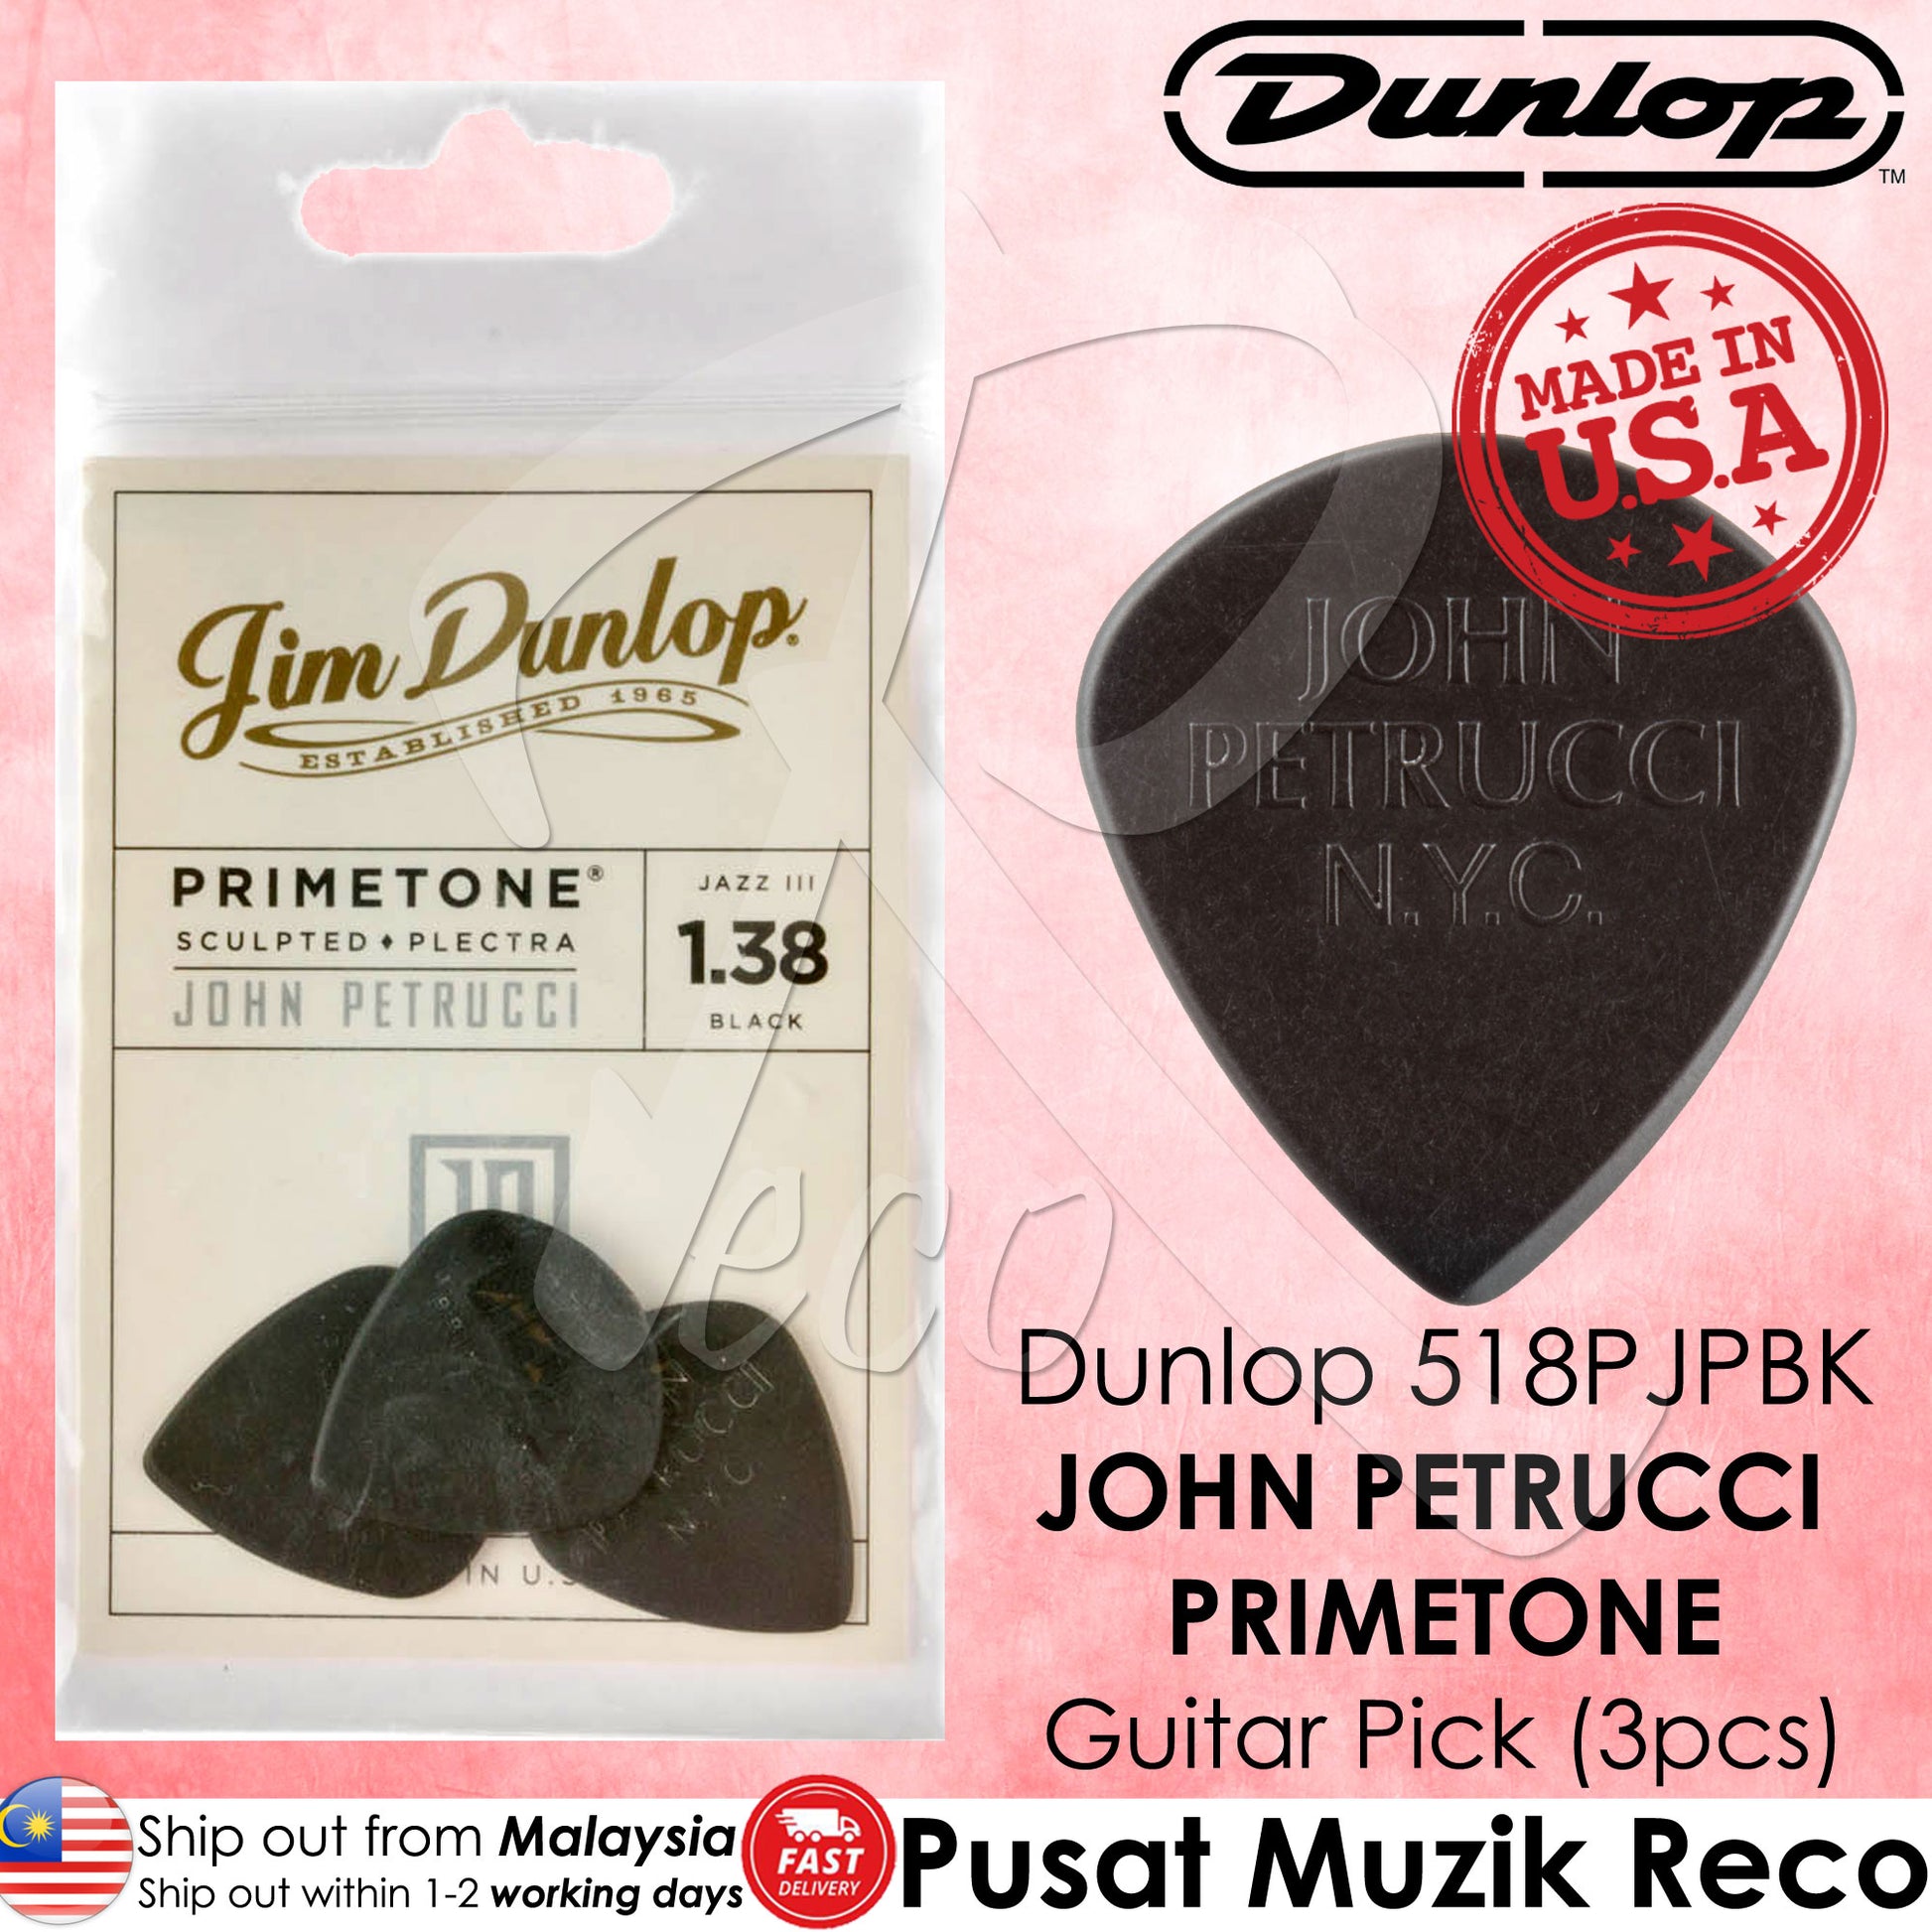 Jim Dunlop 518PJPBK John Petrucci Primetone Jazz III 1.38mm Guitar Picks (3pcs) | Reco Music Malaysia